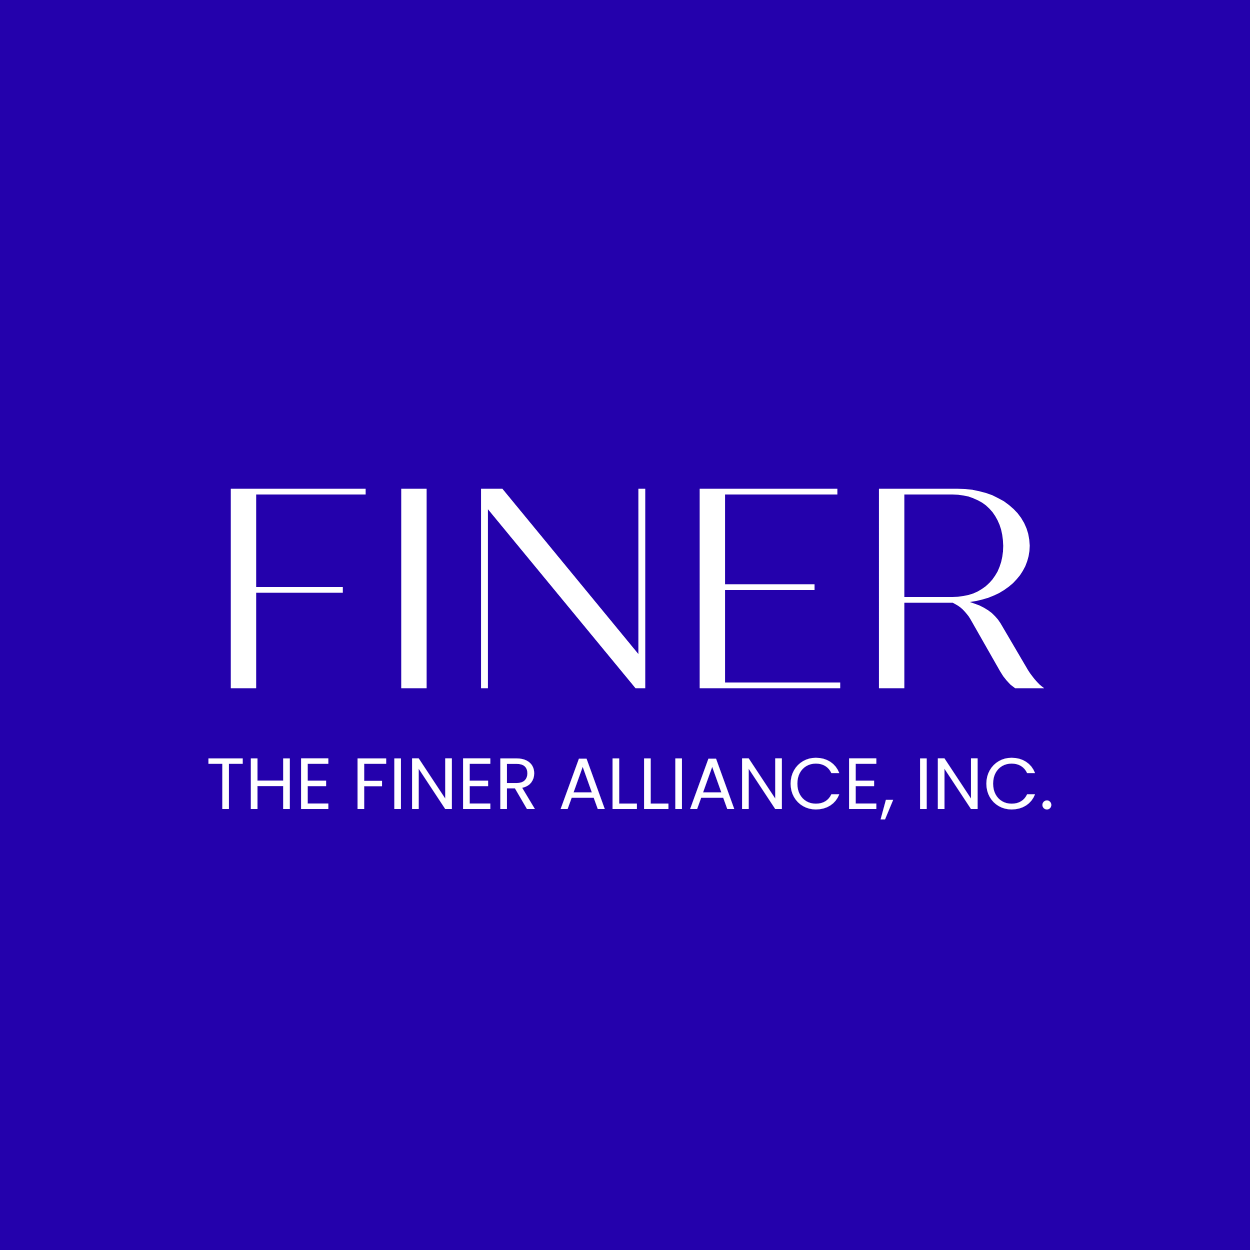 The Finer Alliance, Inc.